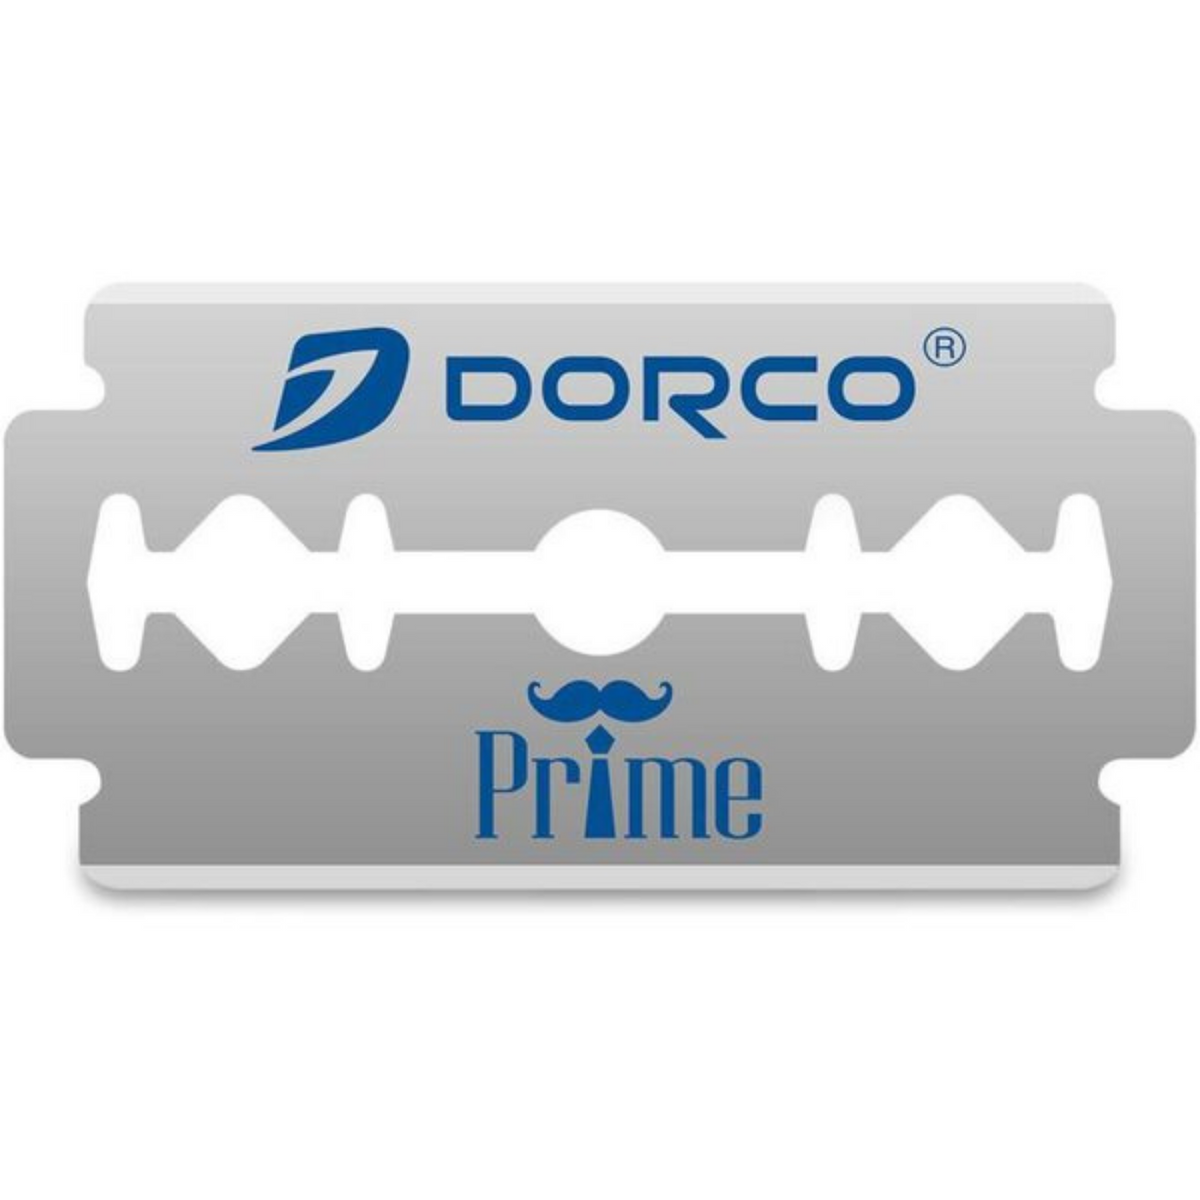 Dorco Single Prime Platinum Blades (10 count) #10084997